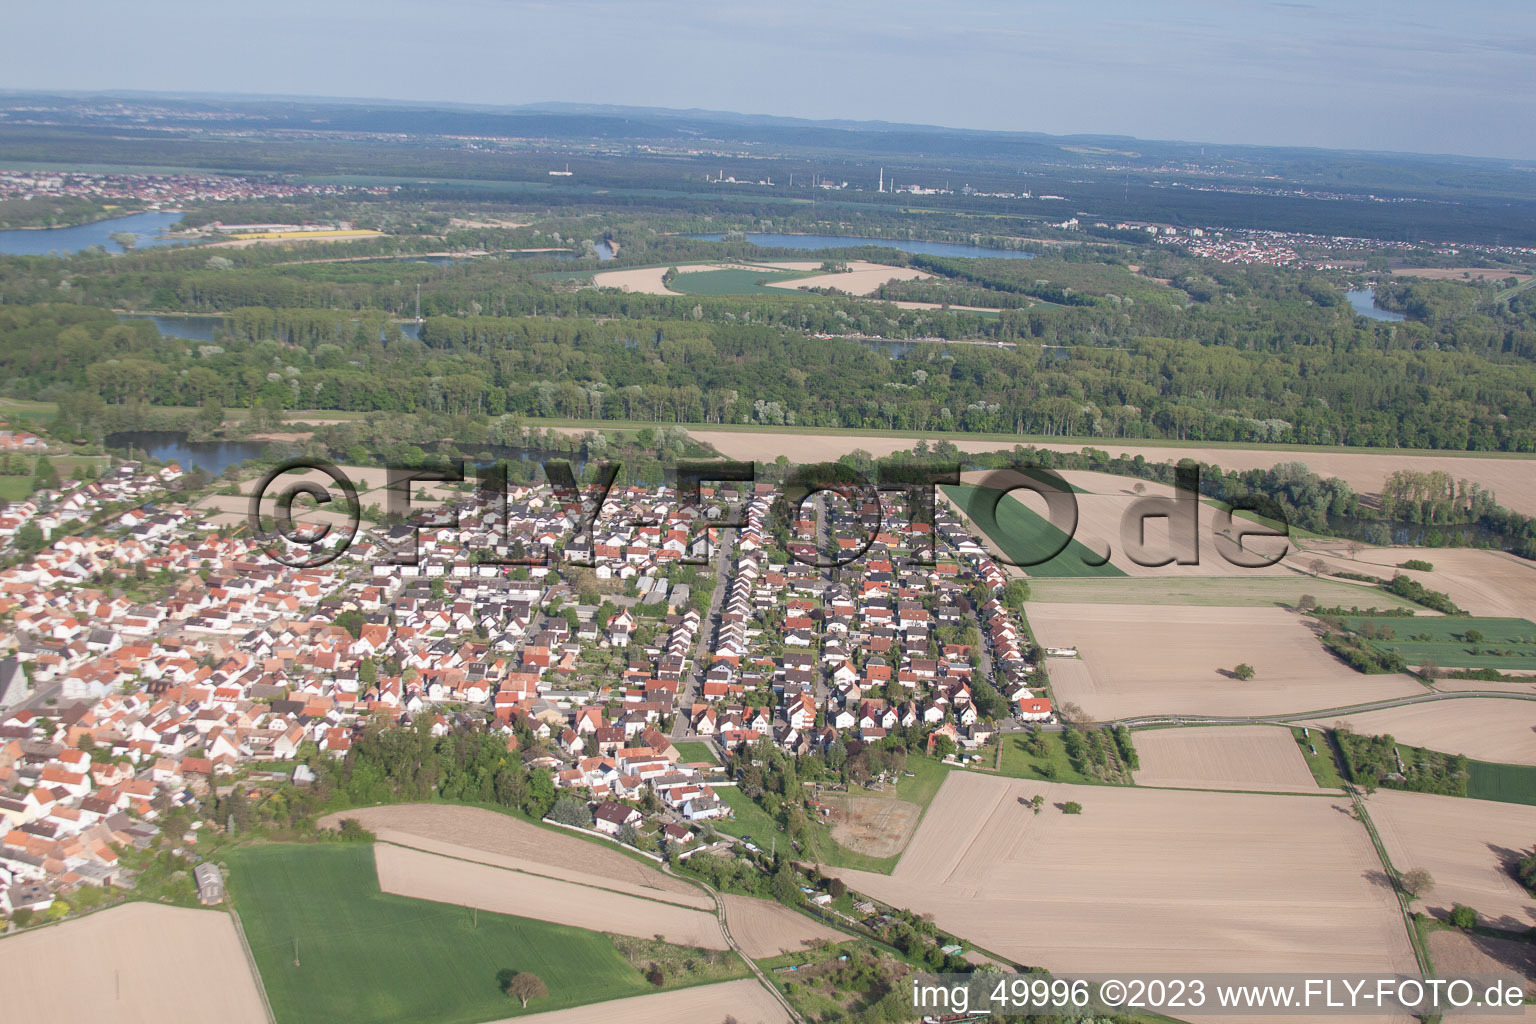 Bird's eye view of Leimersheim in the state Rhineland-Palatinate, Germany